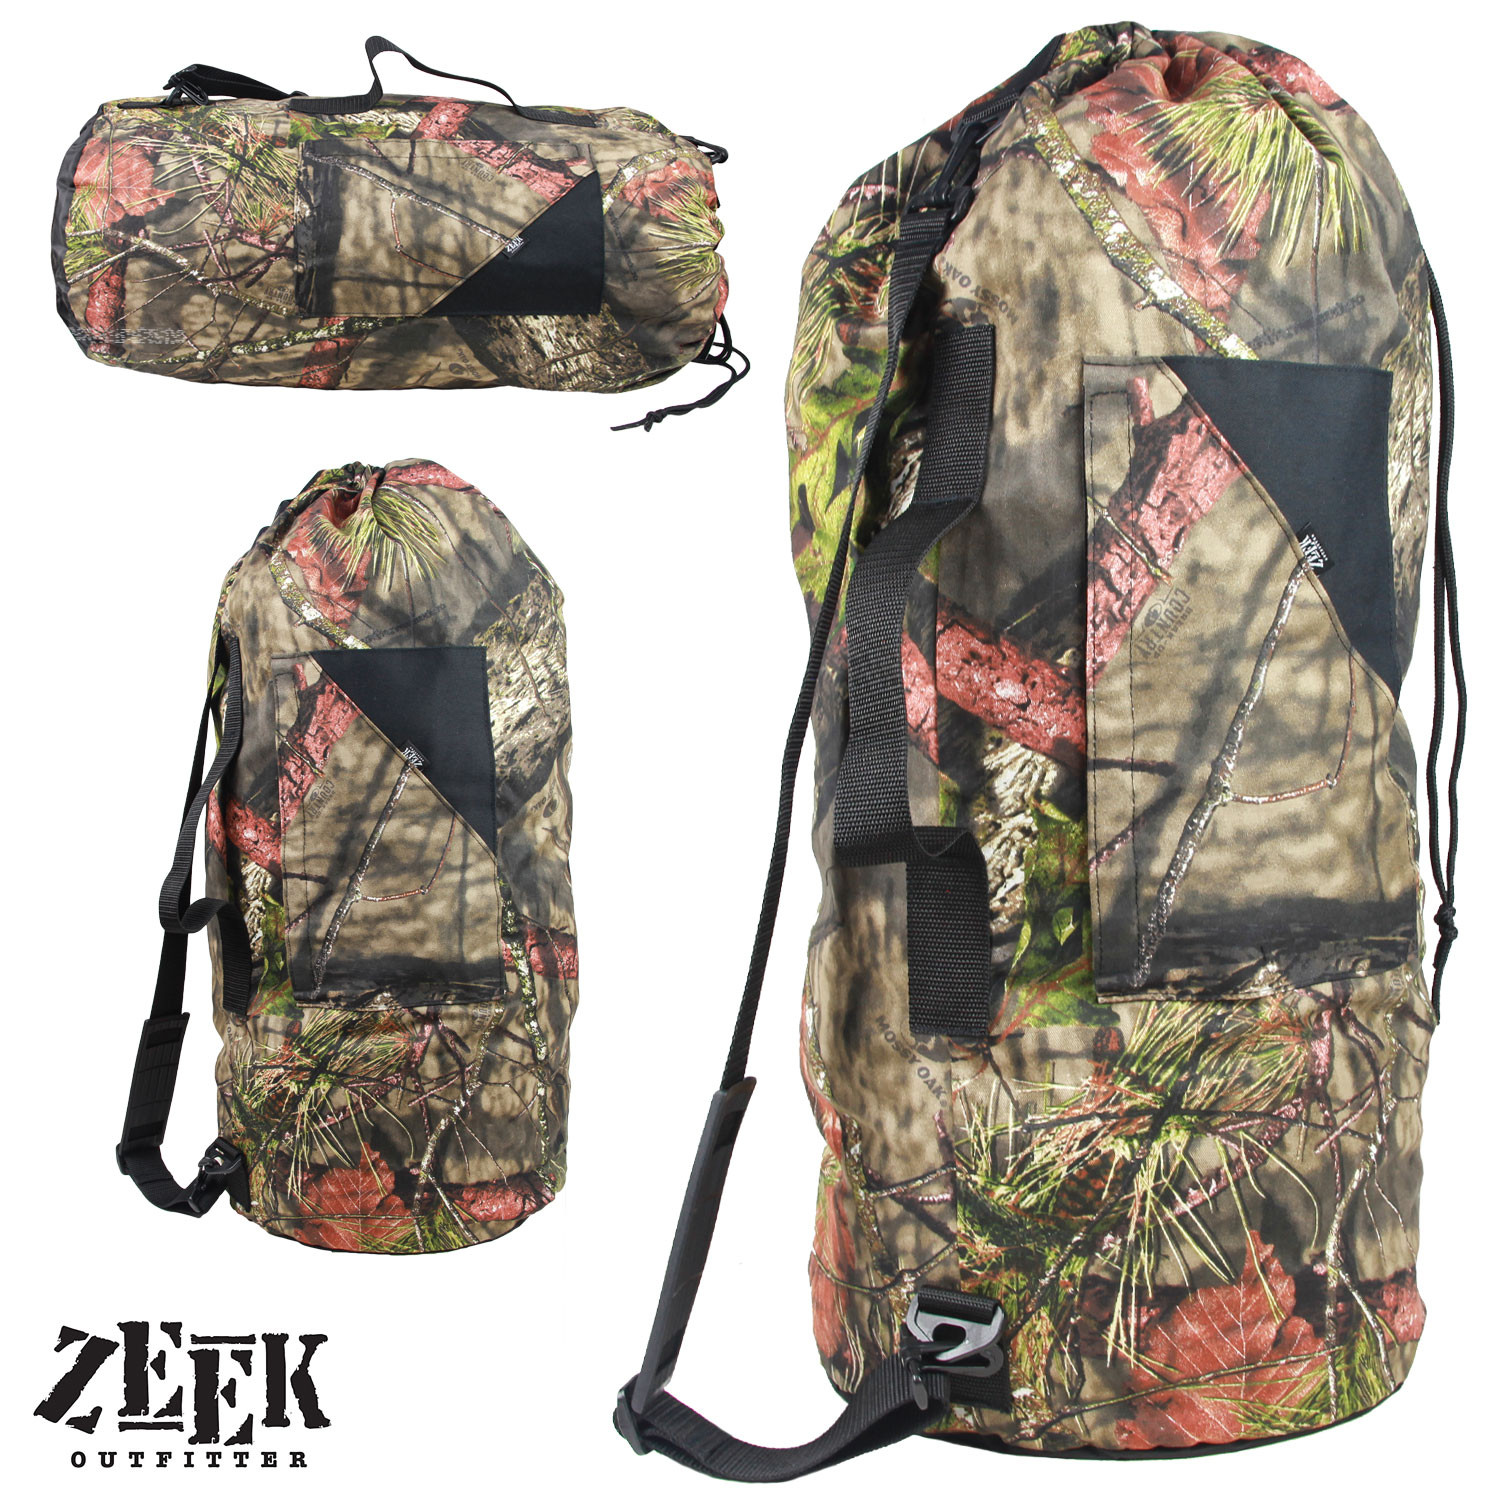 27.5" Zeek Outfitters Stuff & Go 60L Duffle $14.50 + Free Shipping